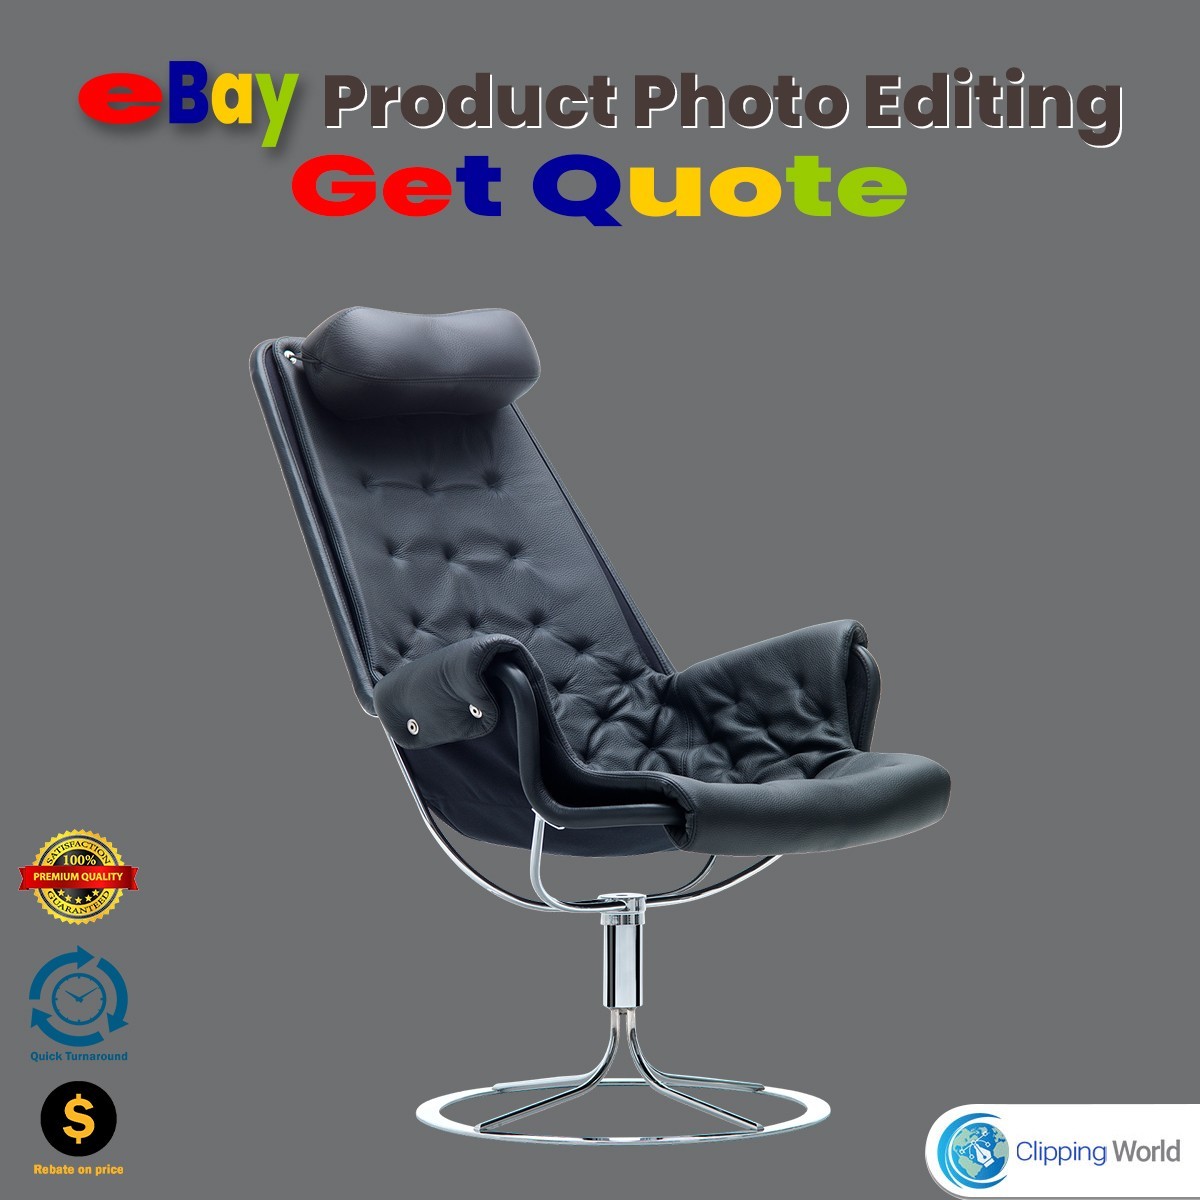 eBay Photo Editing